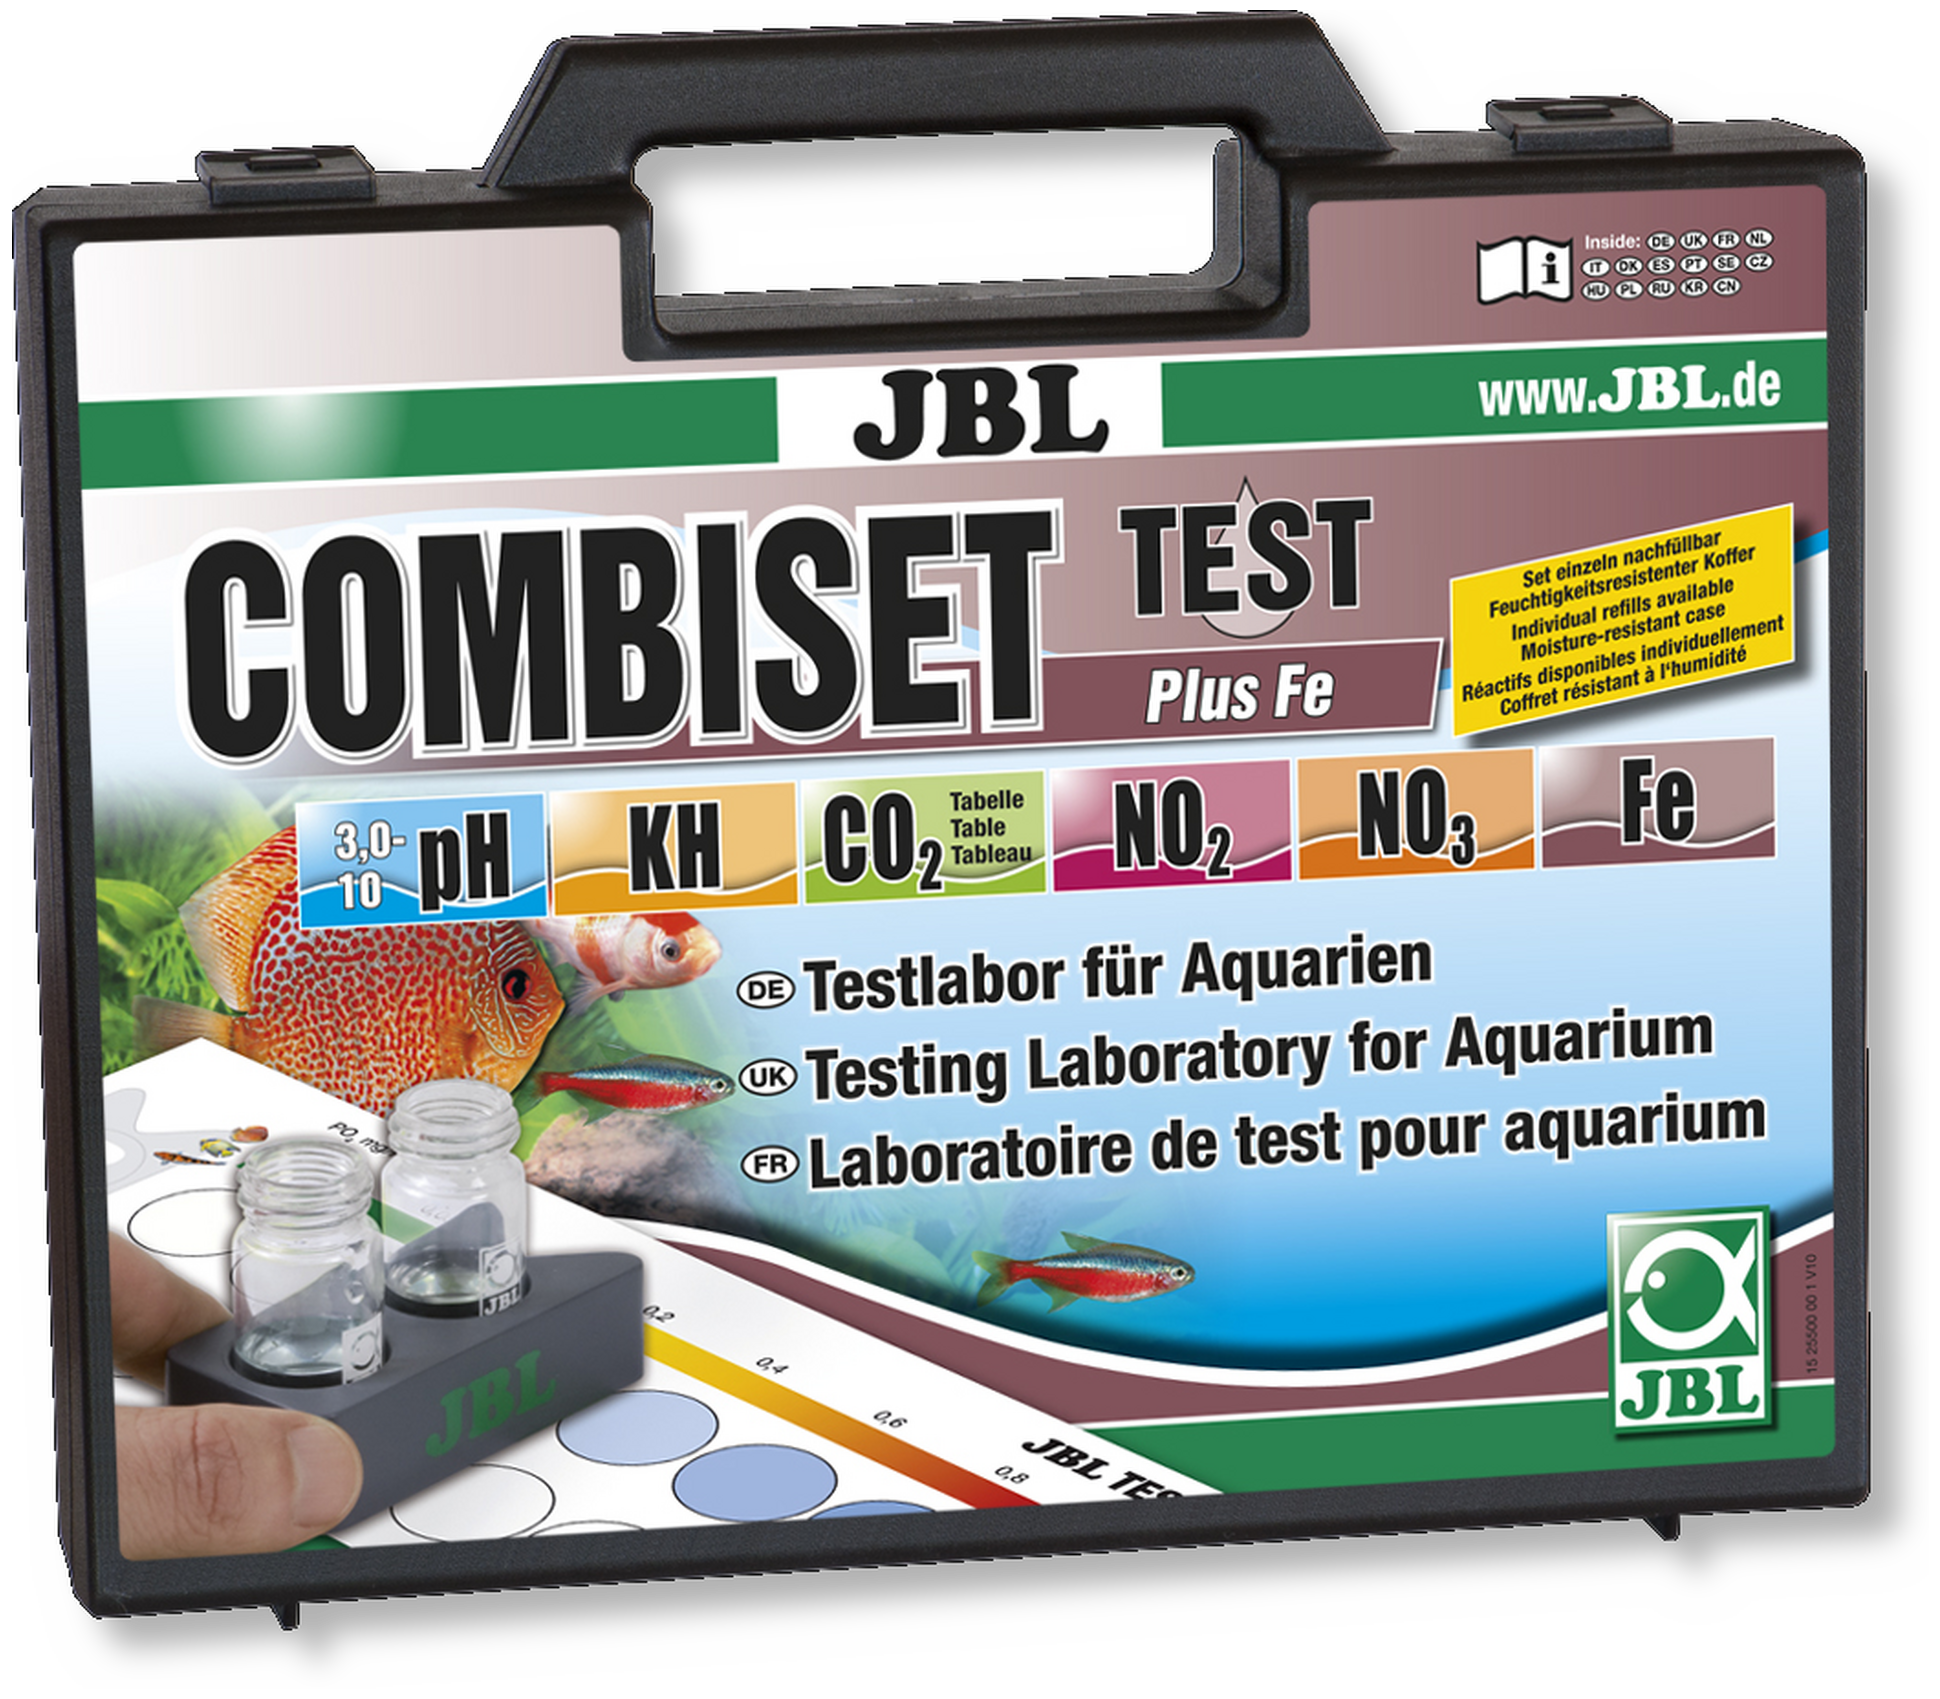 JBL Test Combi Set plus Fe